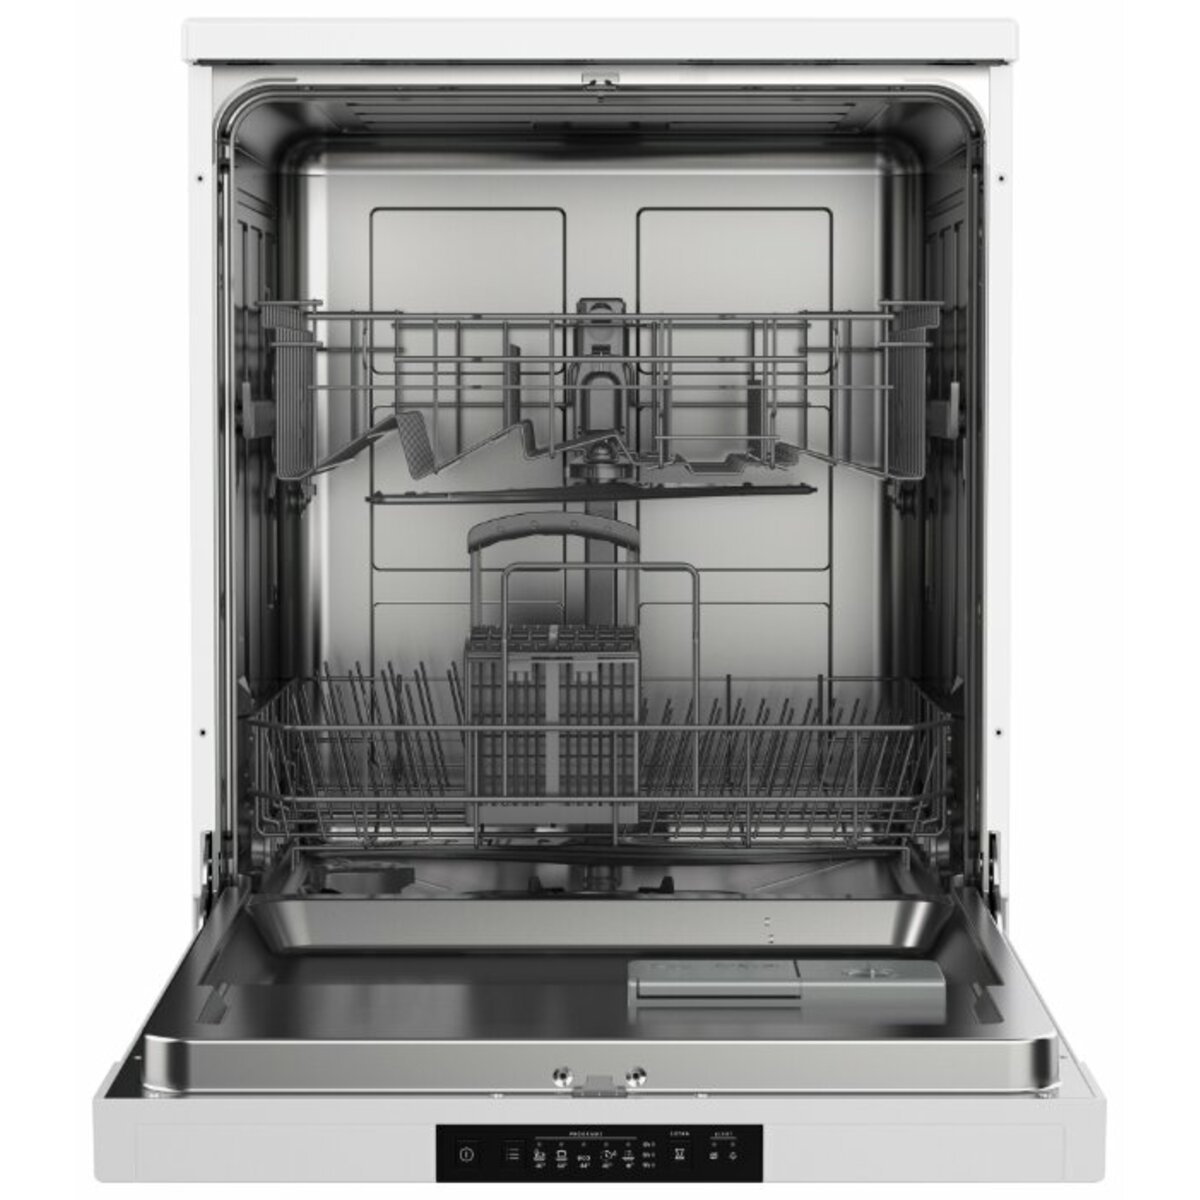 Посудомоечная машина Gorenje GS62040W (Цвет: White)